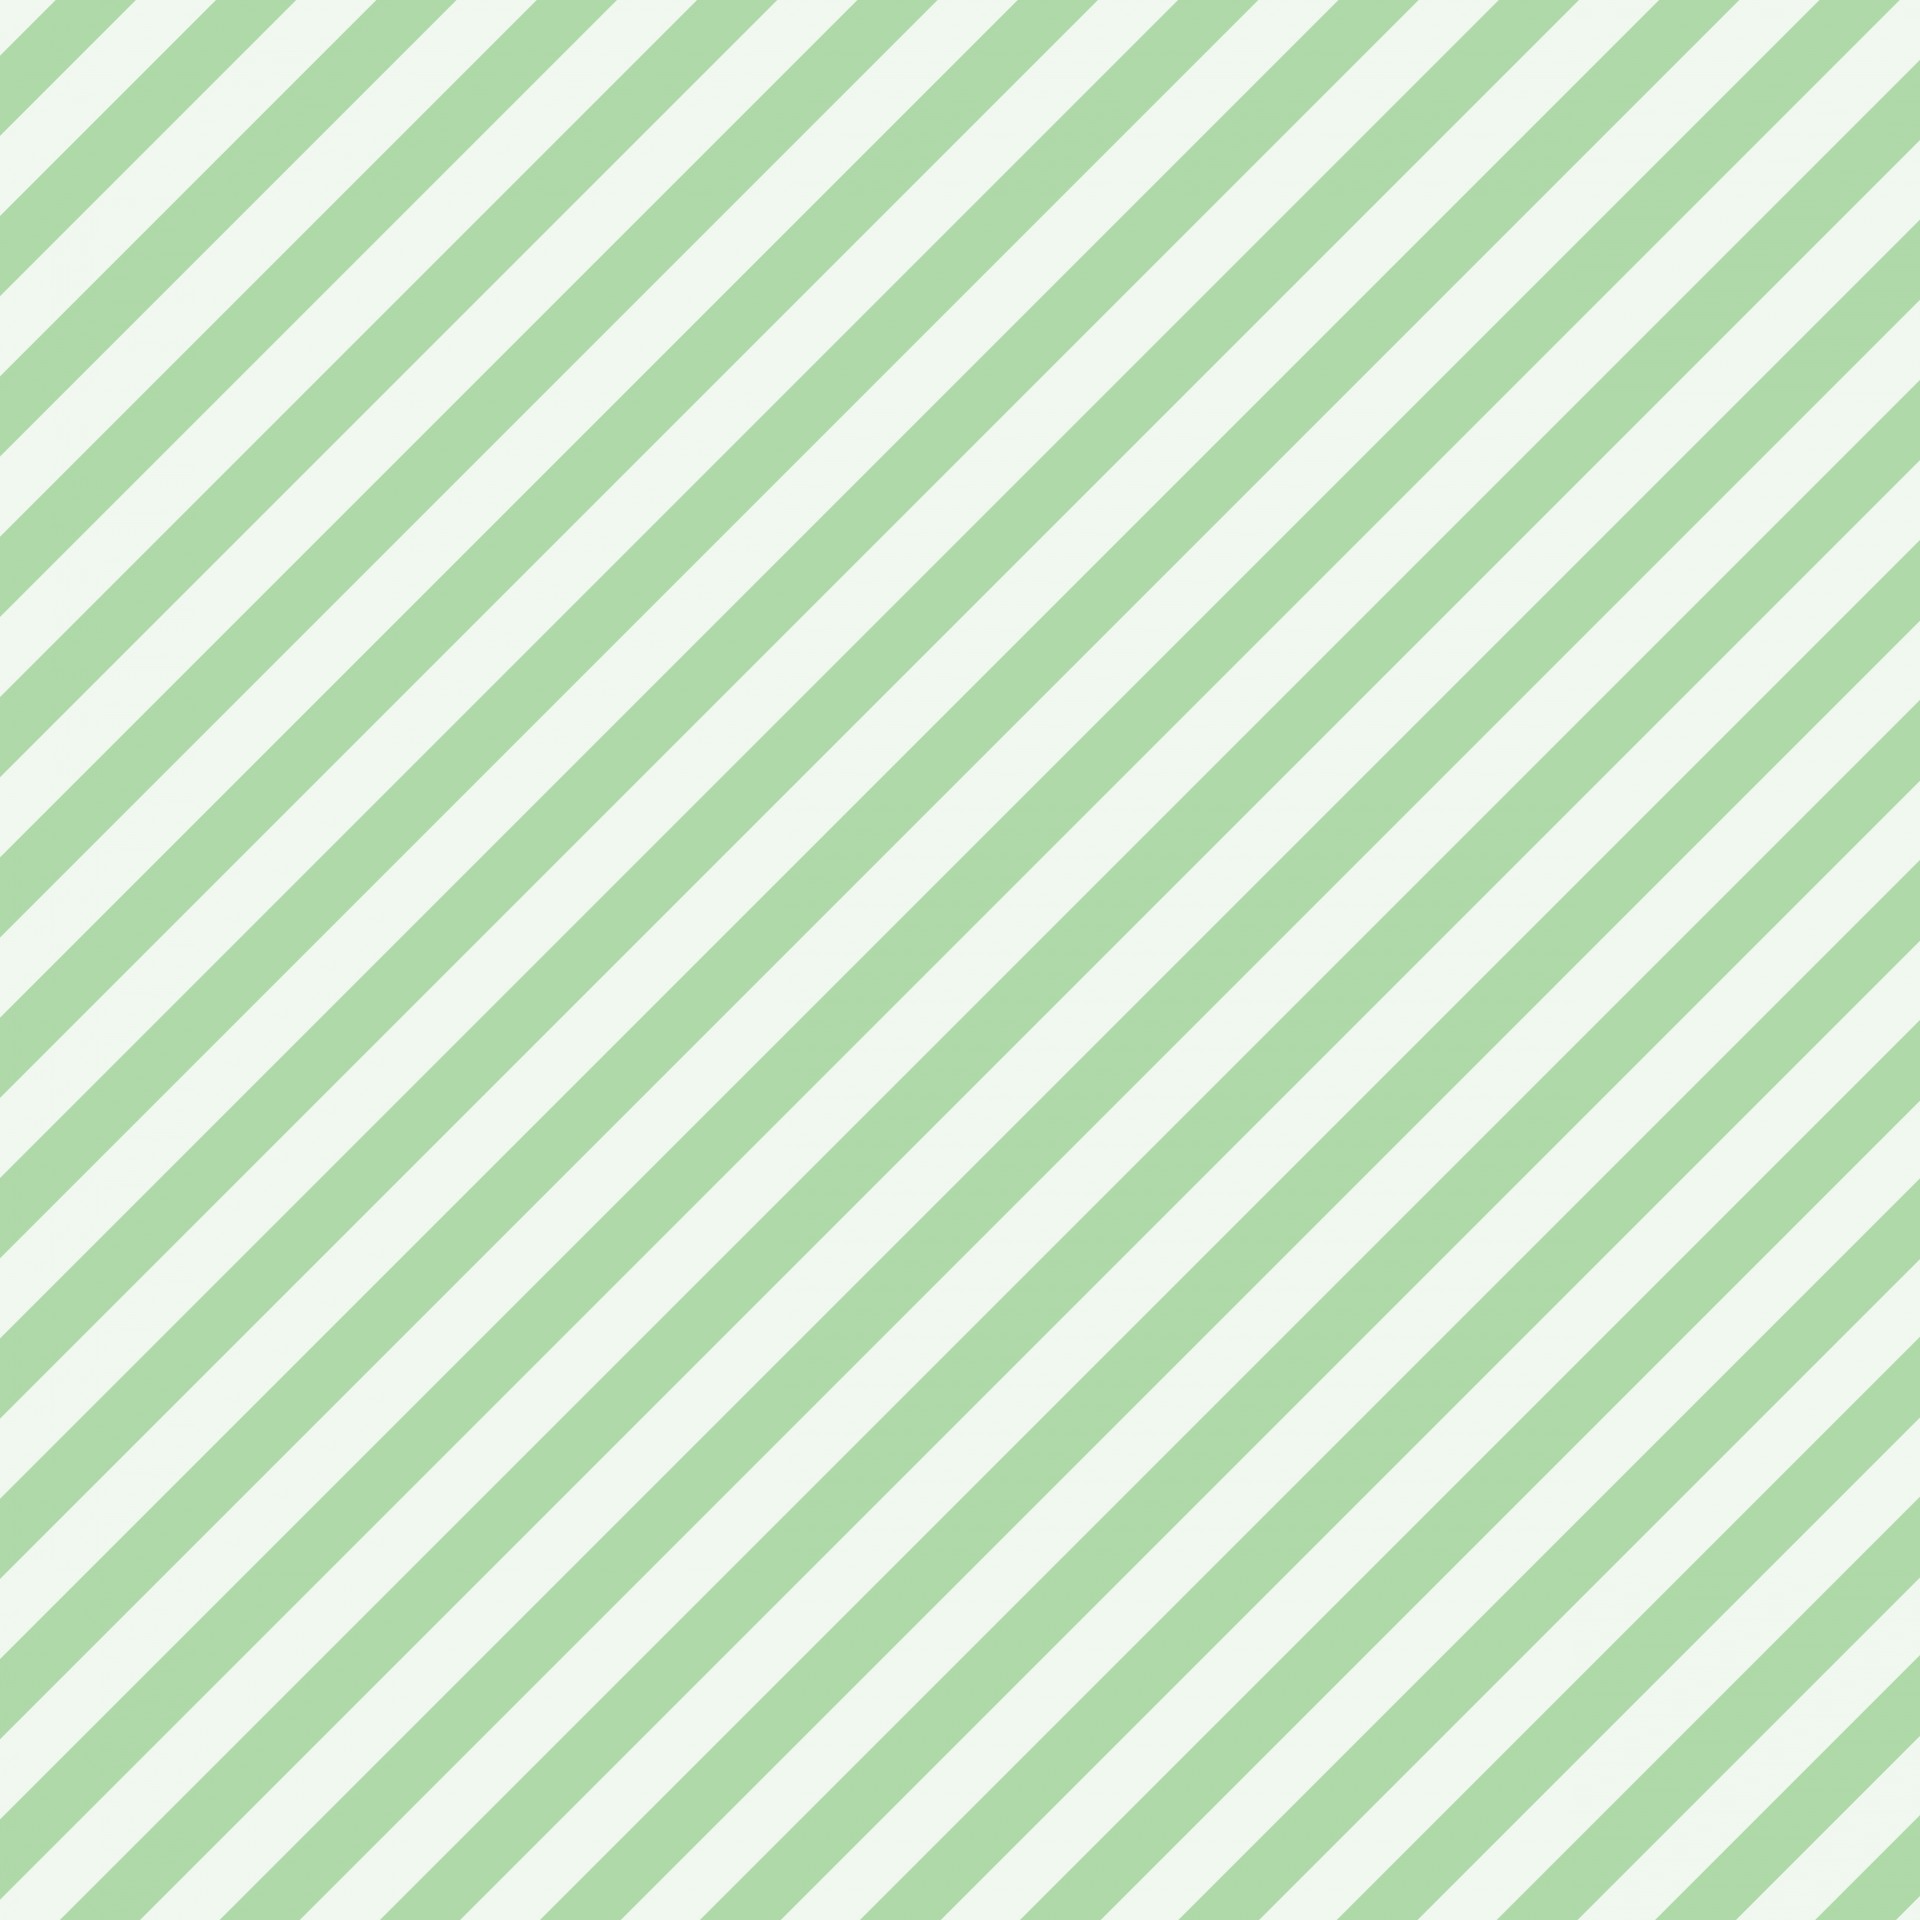 Stripe,striped,stripes,green,diagonal - free image from